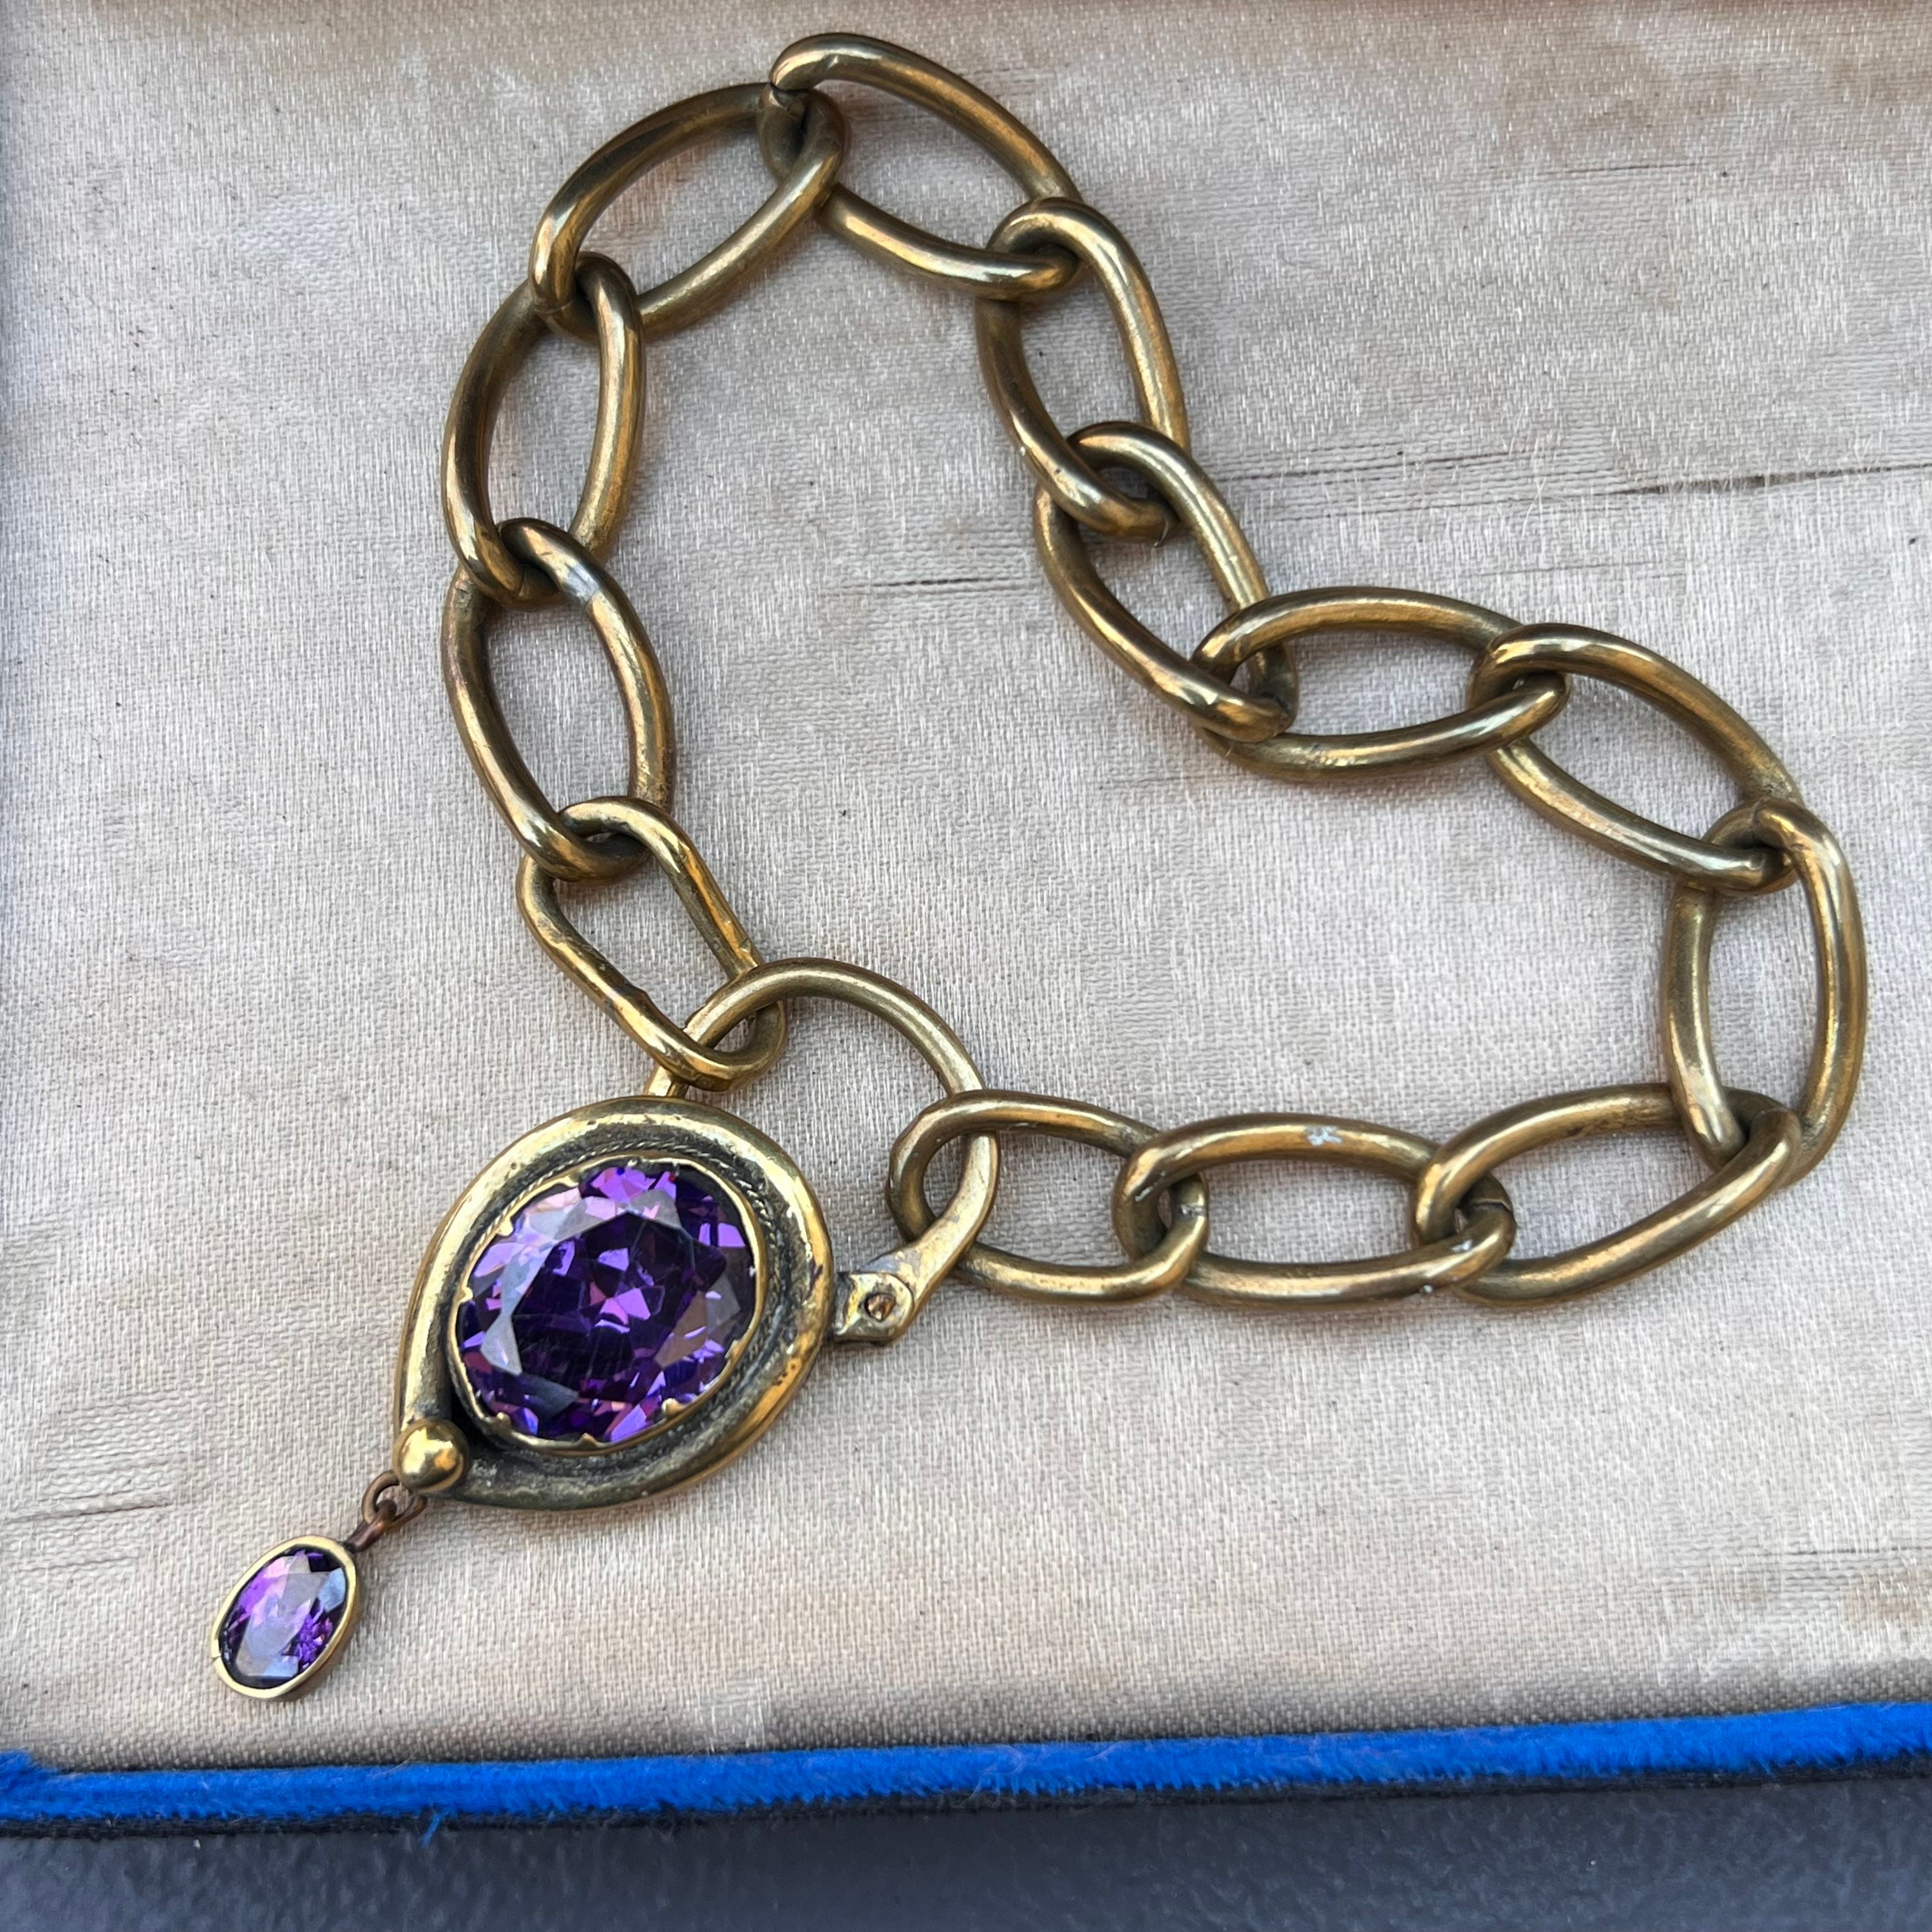 Antique Gold Bracelet with Locket Back Heart Pendant with Diamond Set Flower